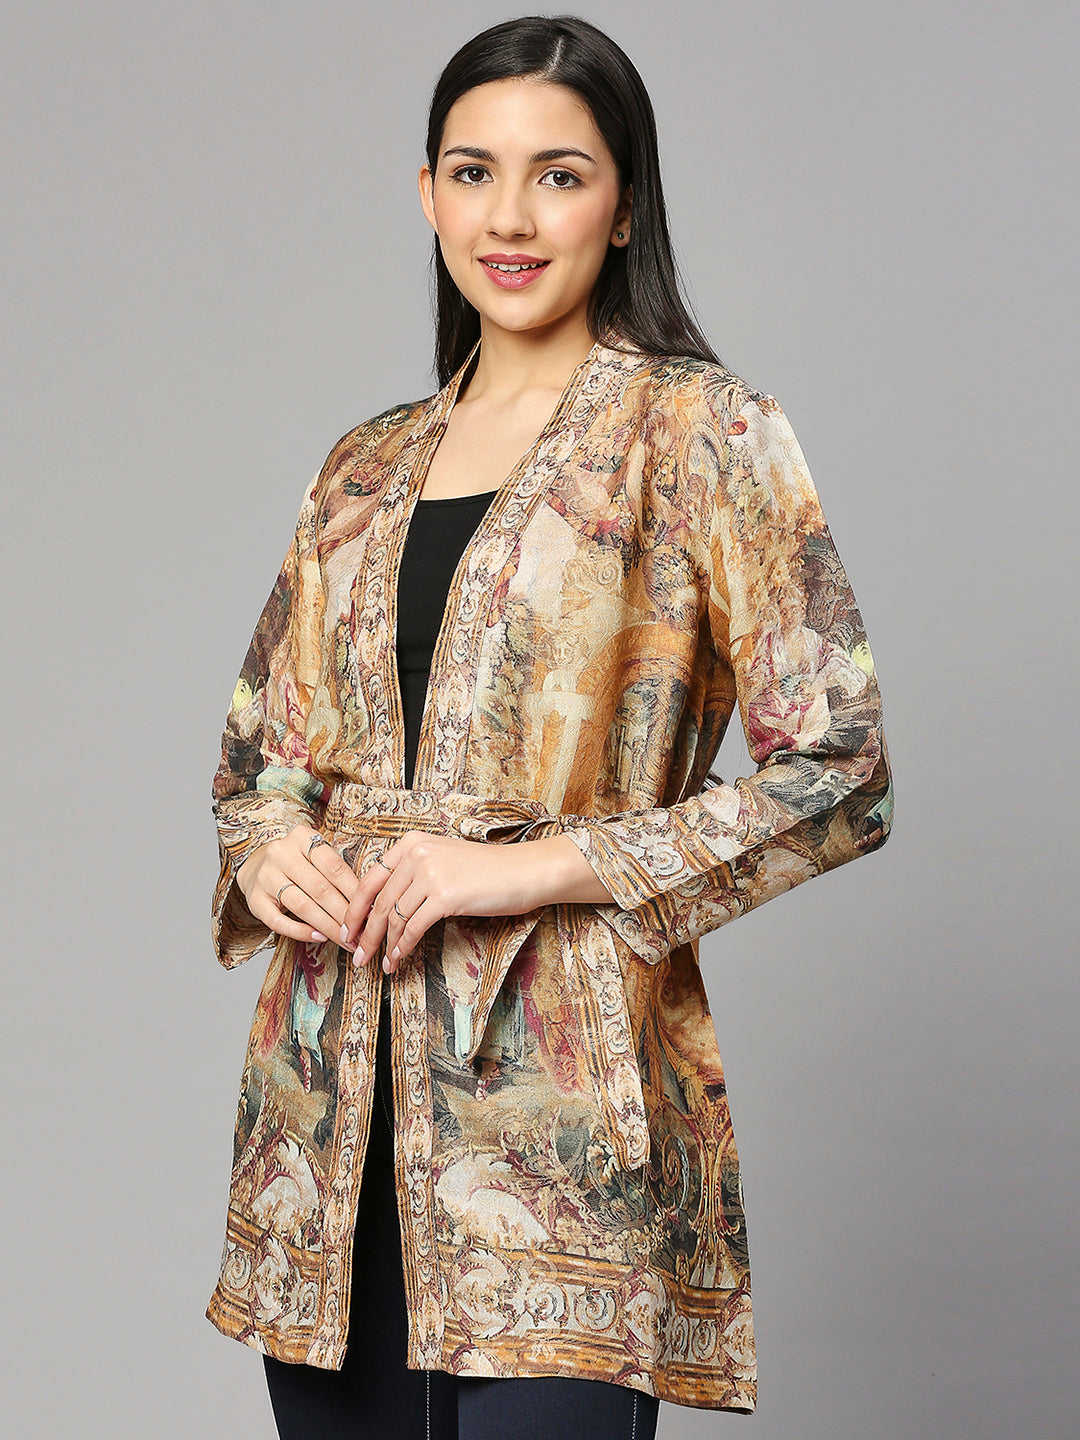 Roman Printed Design Kimono on Metallic Fabric